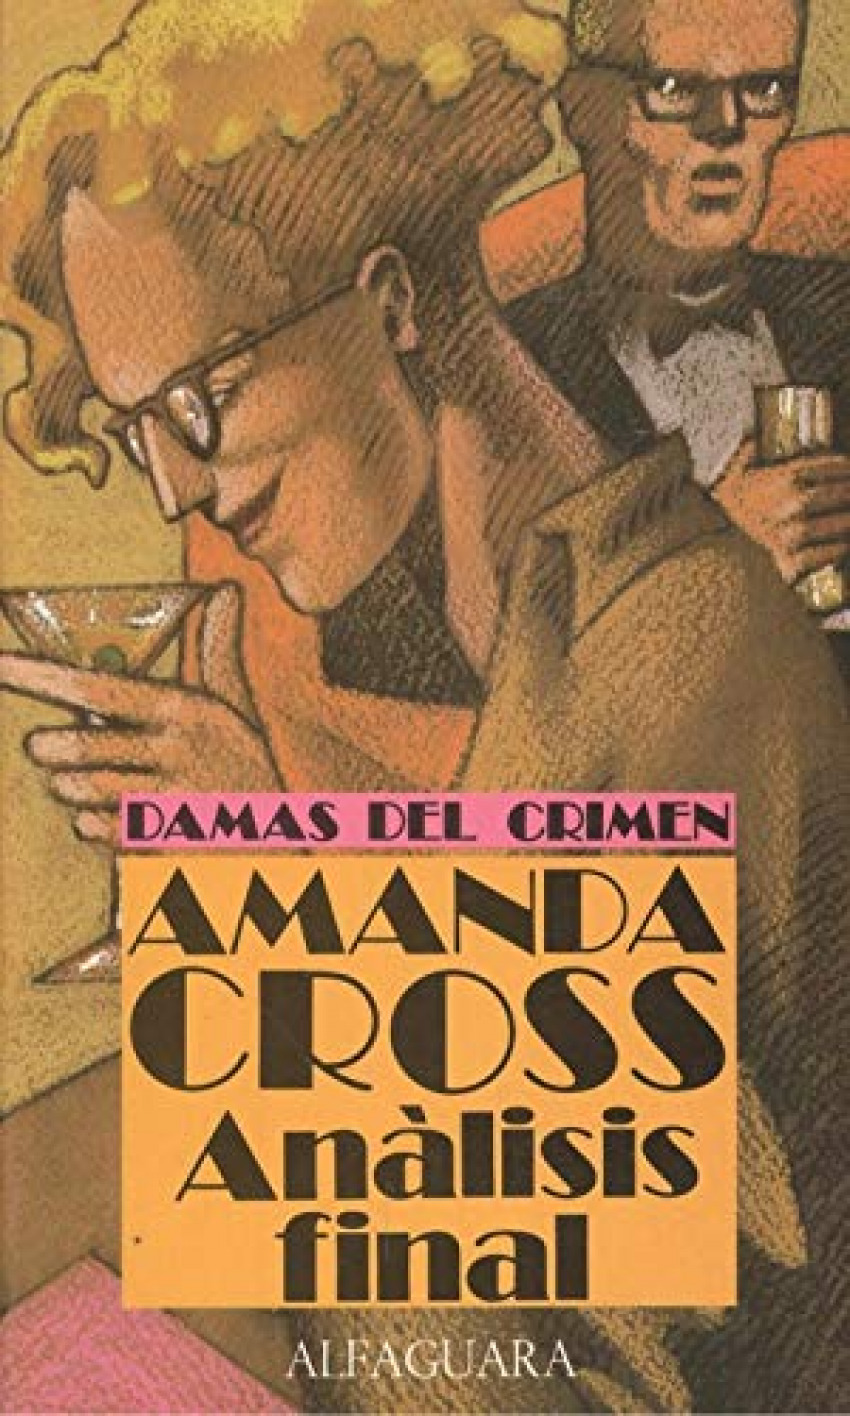 Analisis final - Cross, Amanda